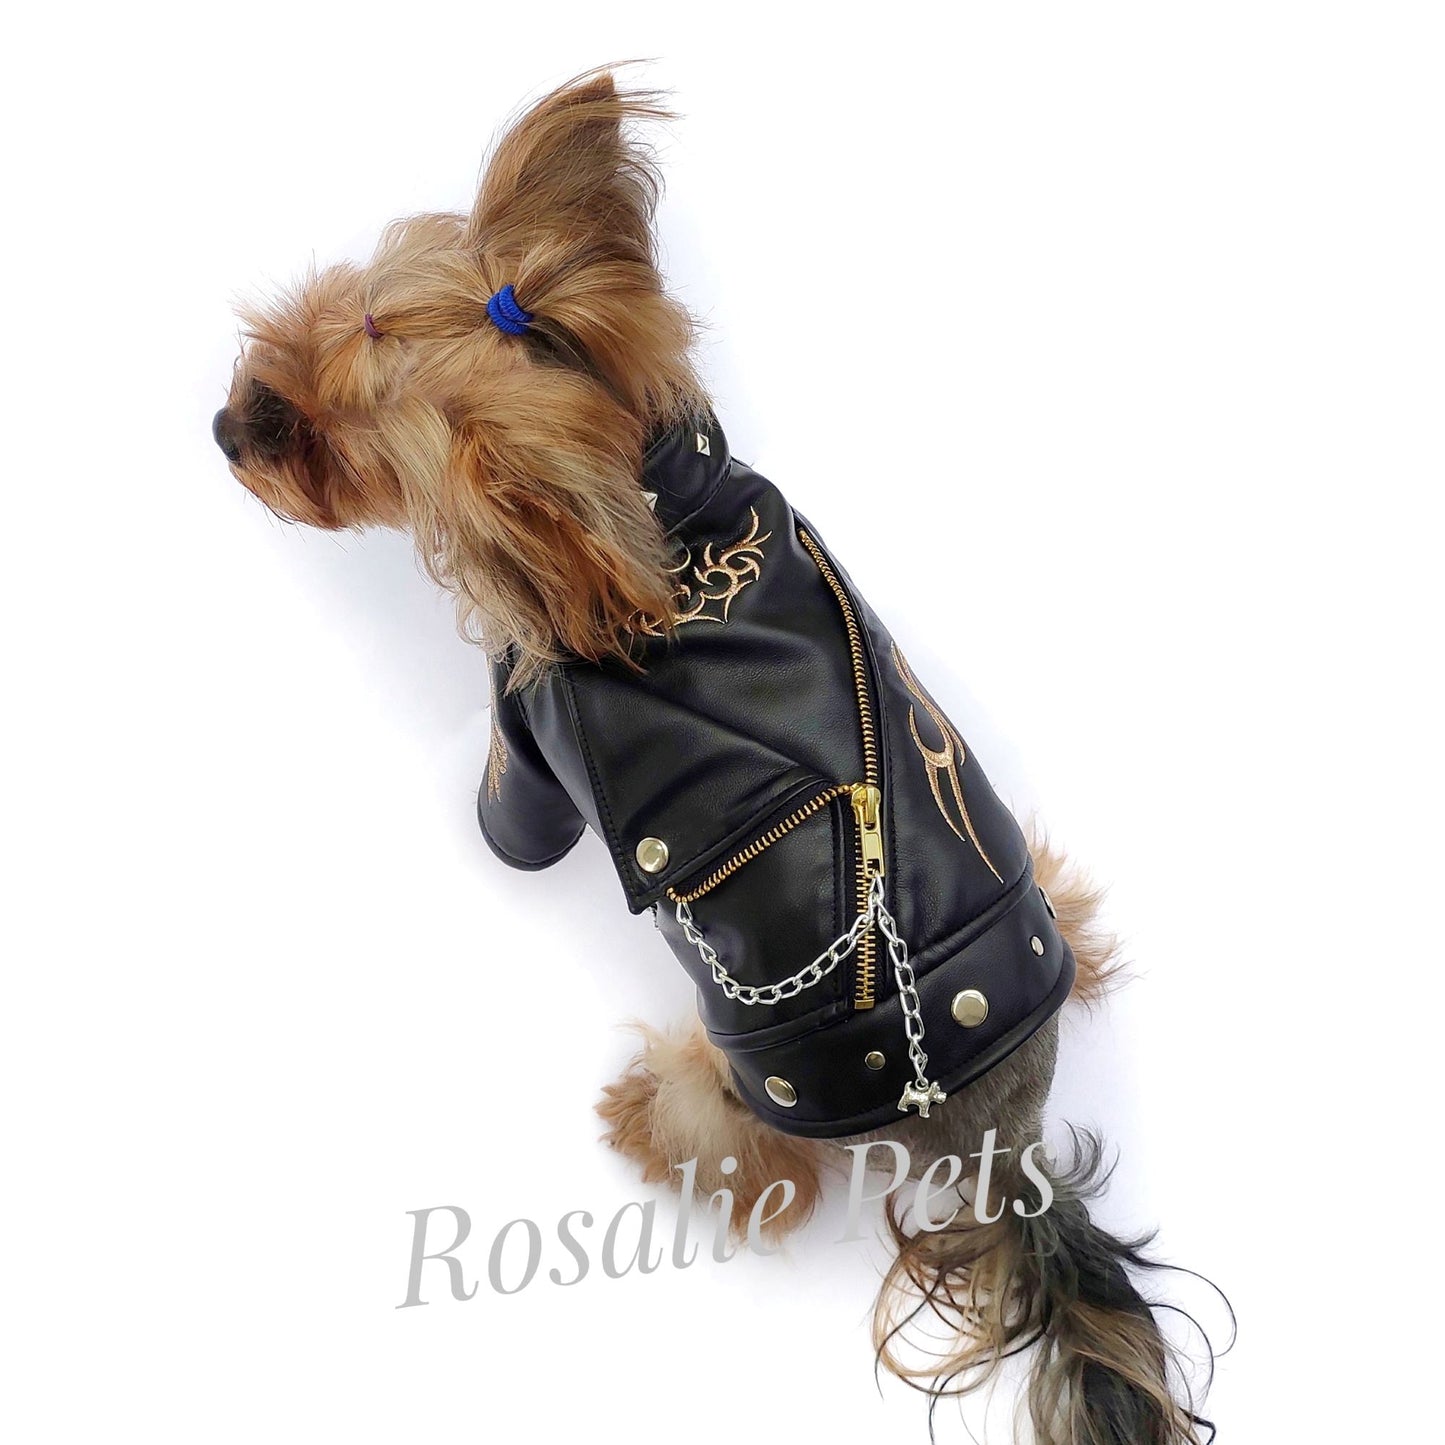 Leather embroidered dog jacket